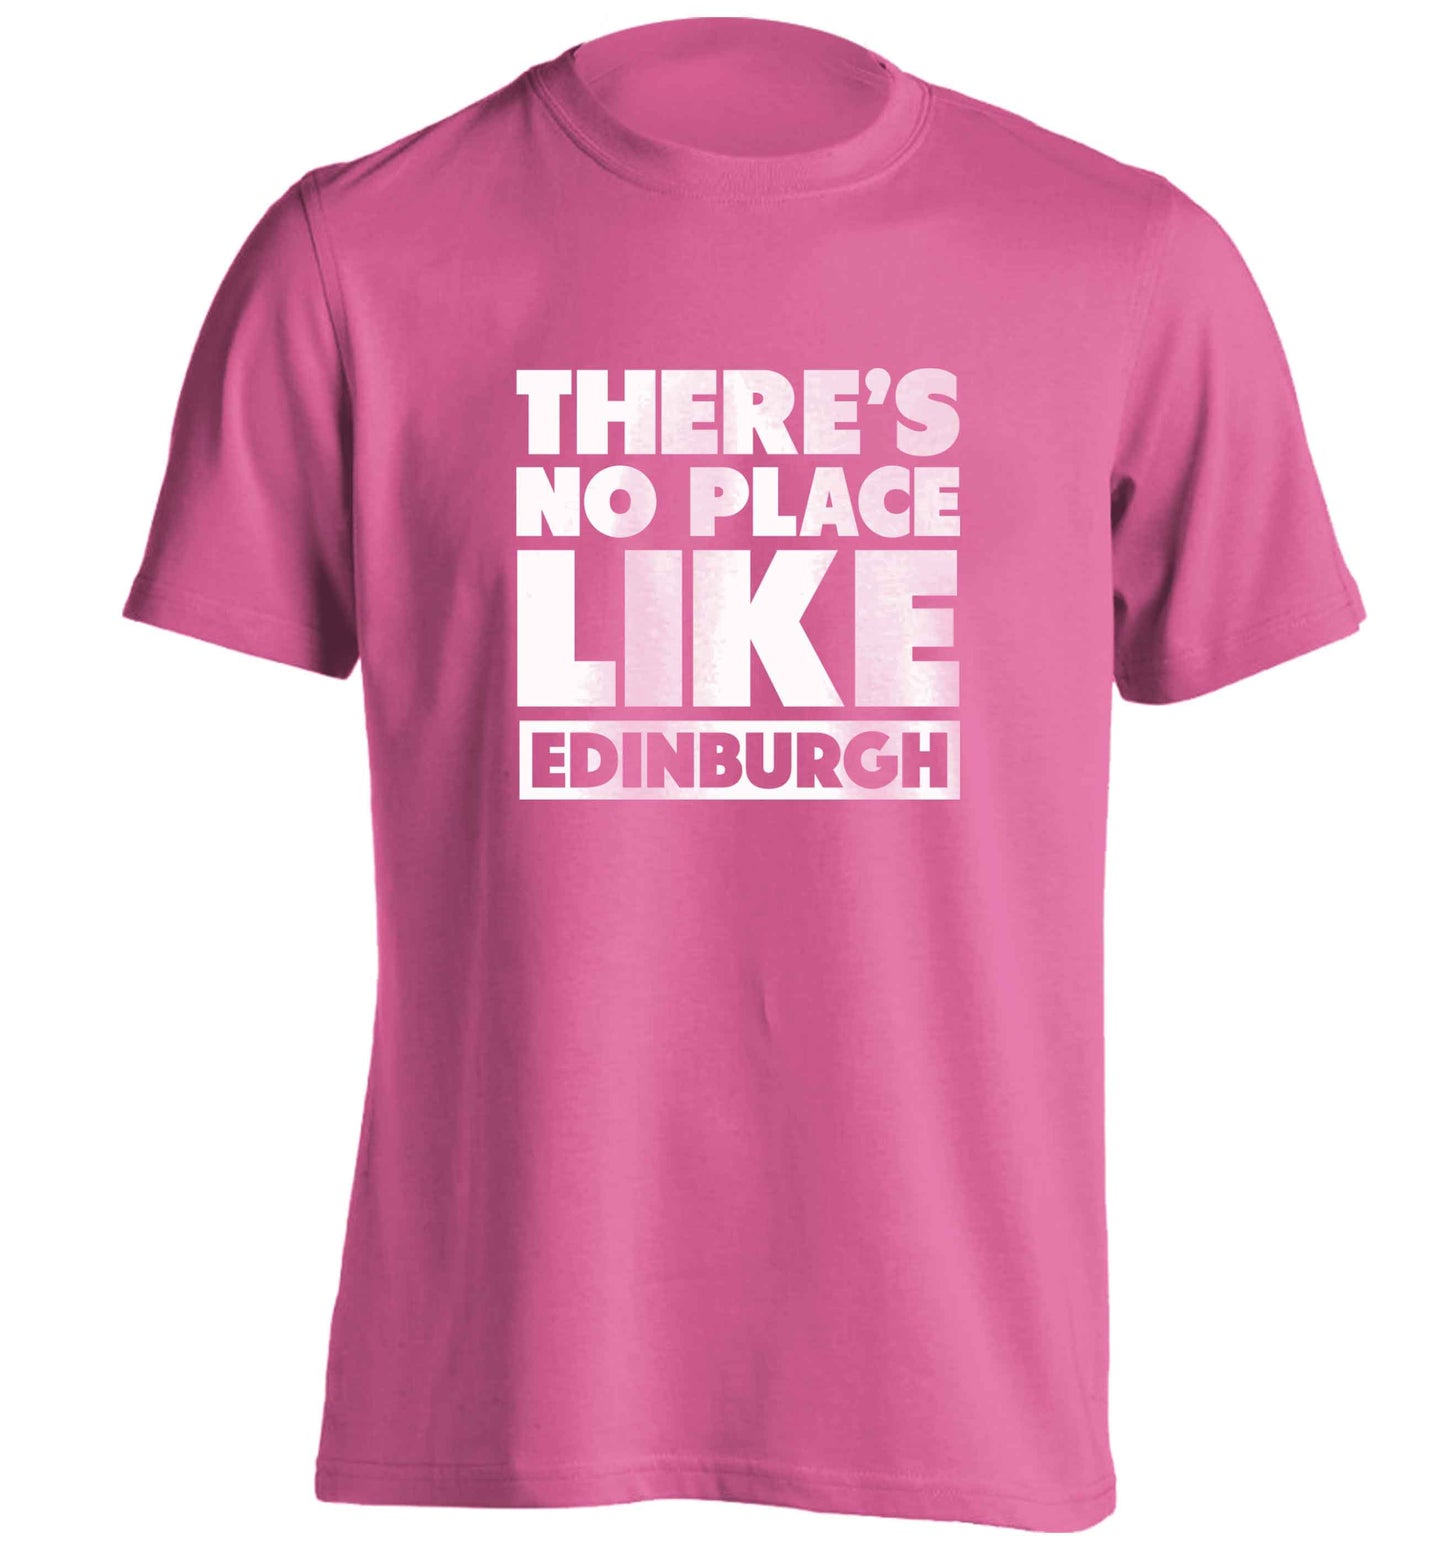 There's no place like Edinburgh adults unisex pink Tshirt 2XL